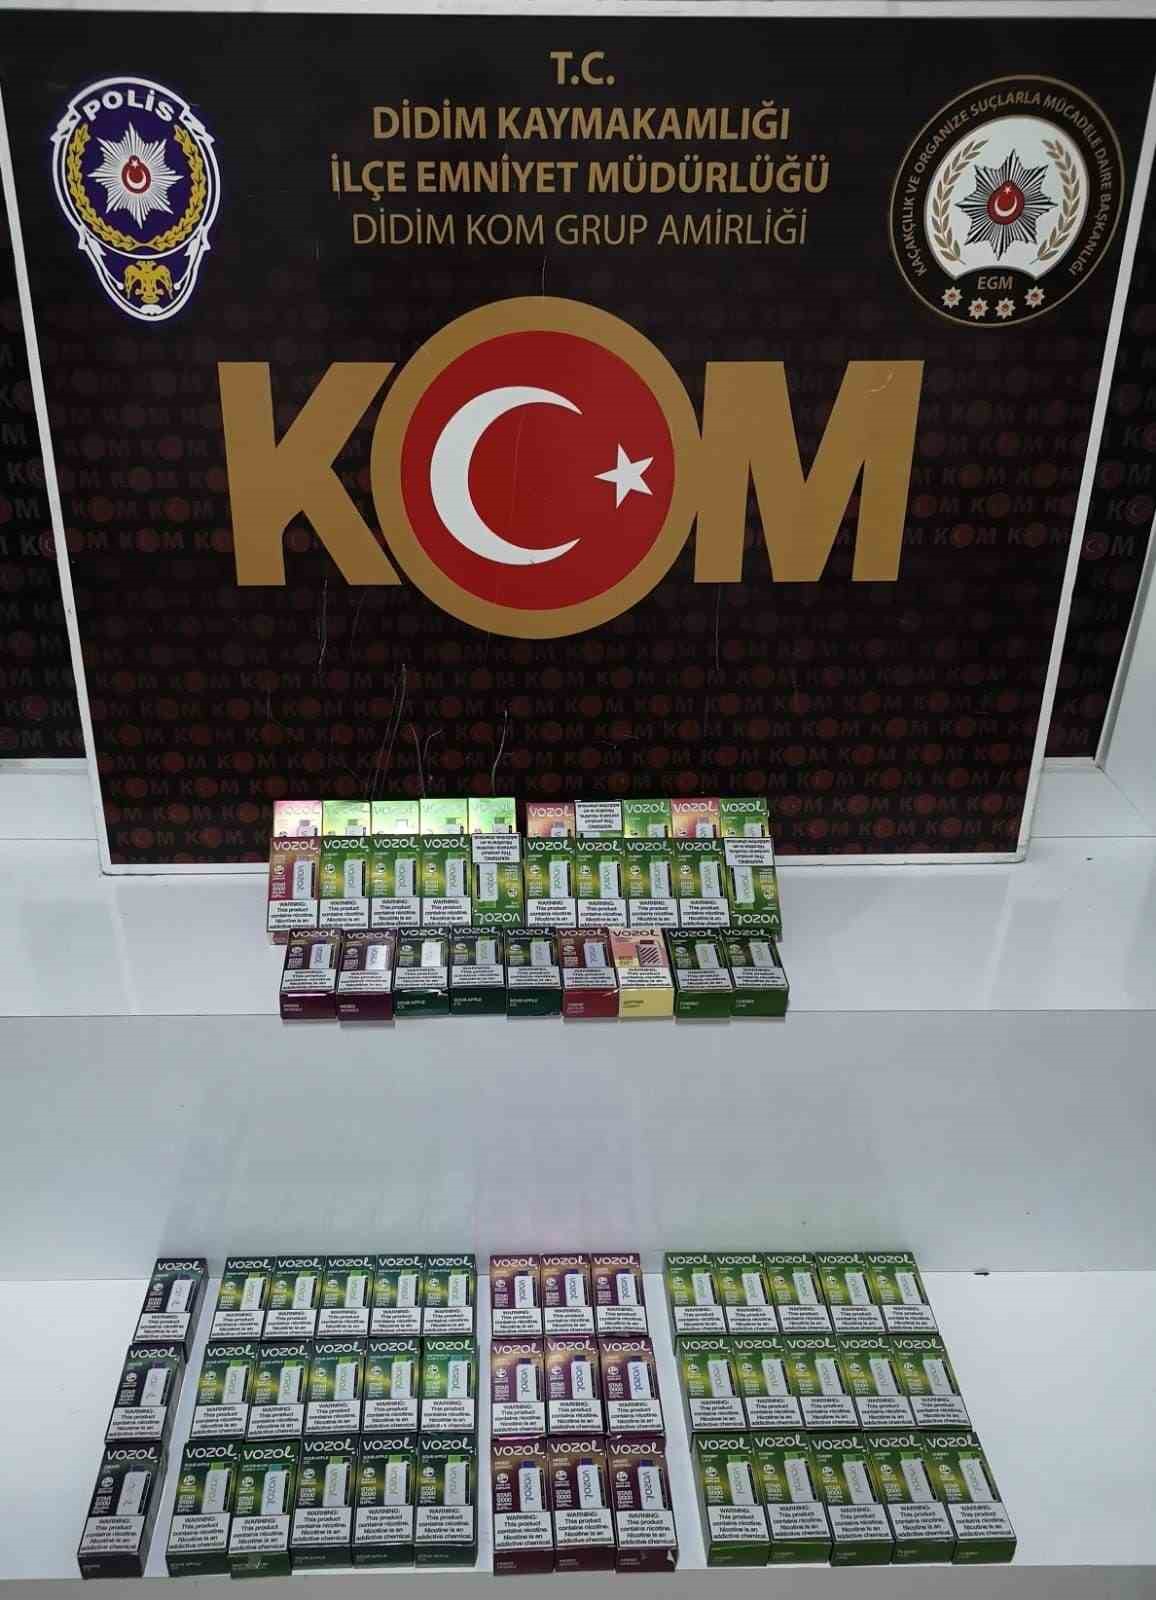 Didim’de 71 adet elektronik sigara yakalandı